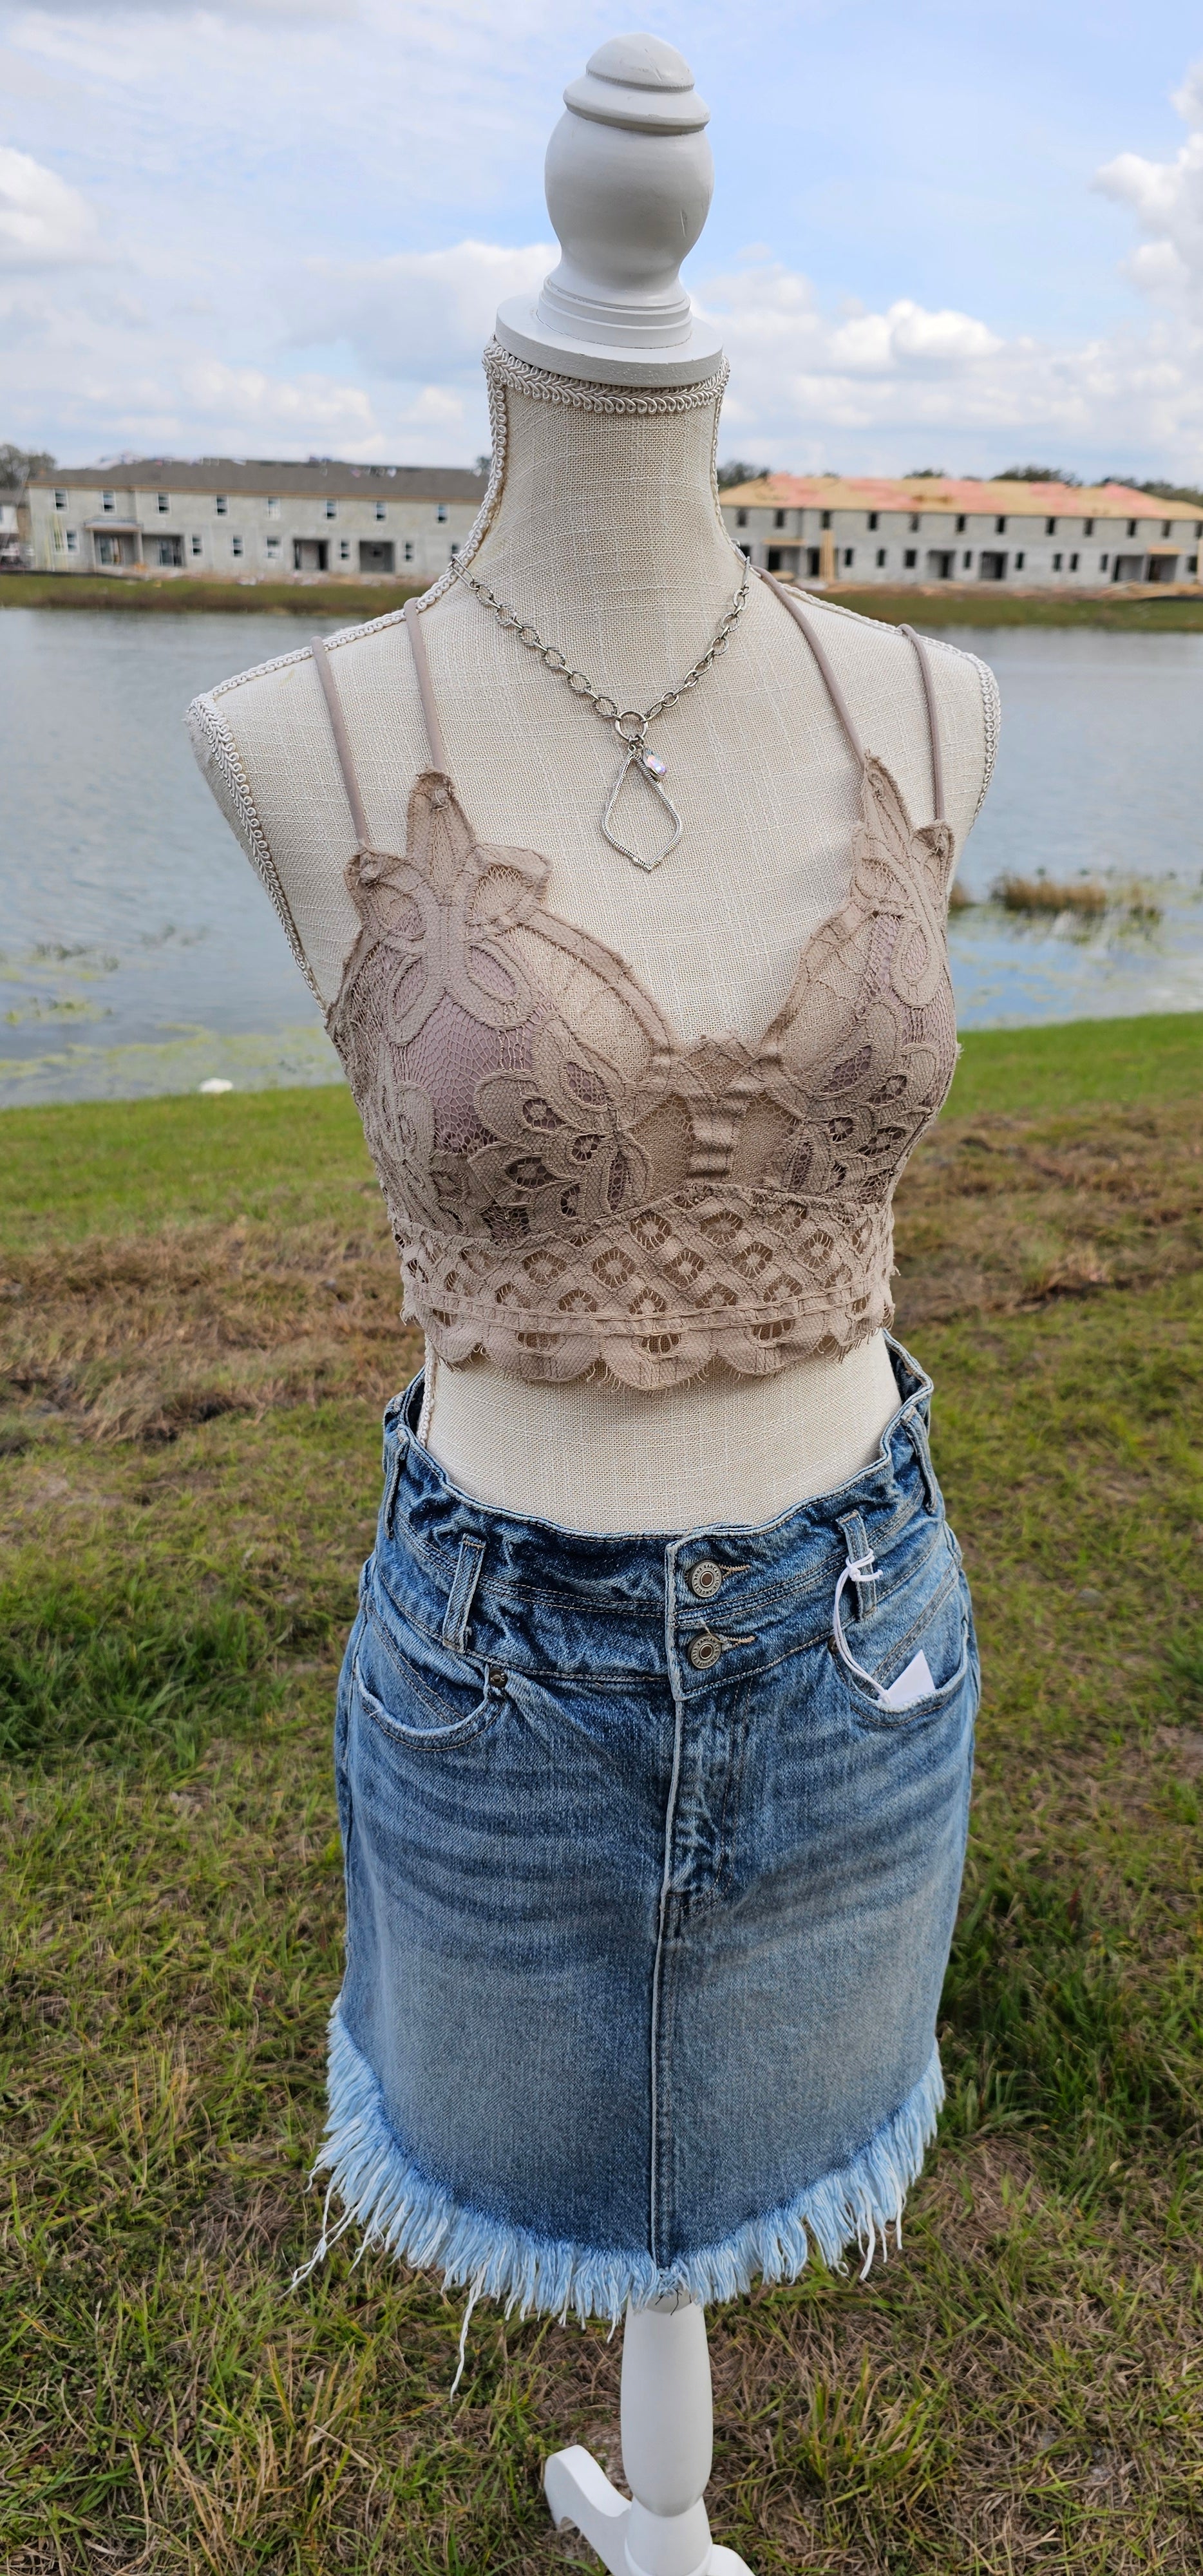 Zenana Crochet Lace Bralette w/ Pads, S - XL, Women's Clothing Boutique